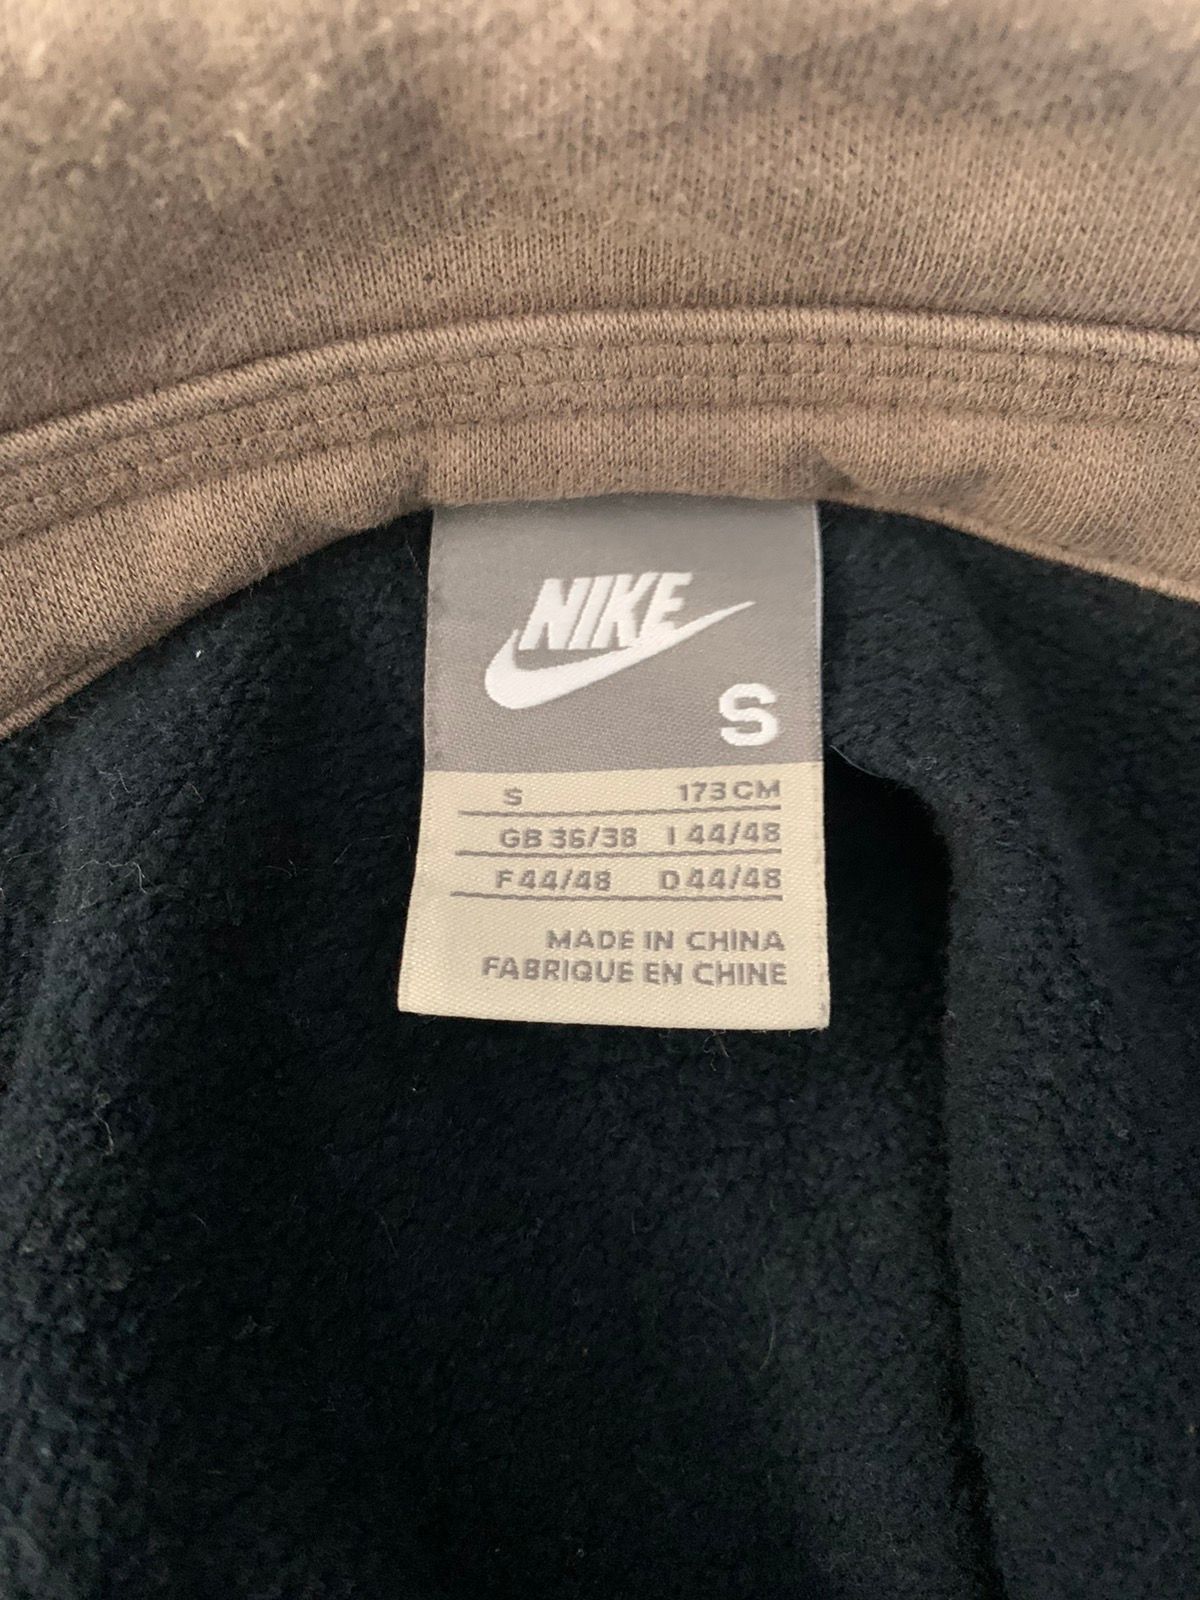 Nike Nike Vintage Light Jacket Size US S / EU 44-46 / 1 - 3 Thumbnail